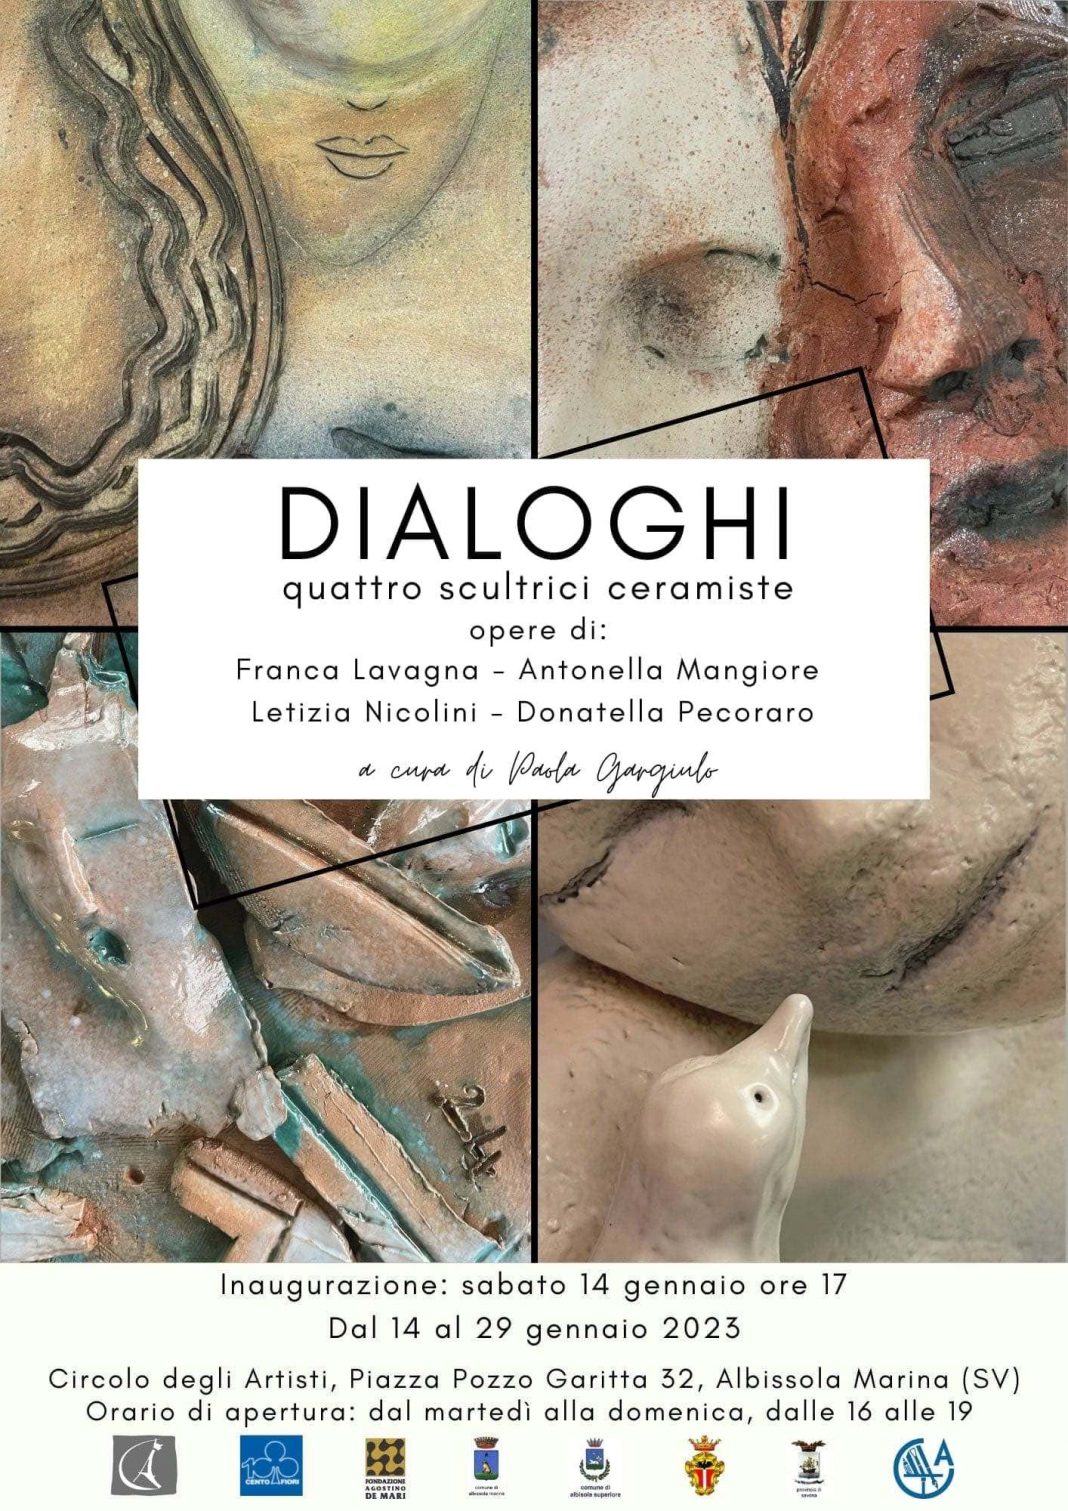 Dialoghi. Quattro scultrici ceramistehttps://www.exibart.com/repository/media/formidable/11/img/21c/DIA-LO-GHI-ridotta-1068x1511.jpg